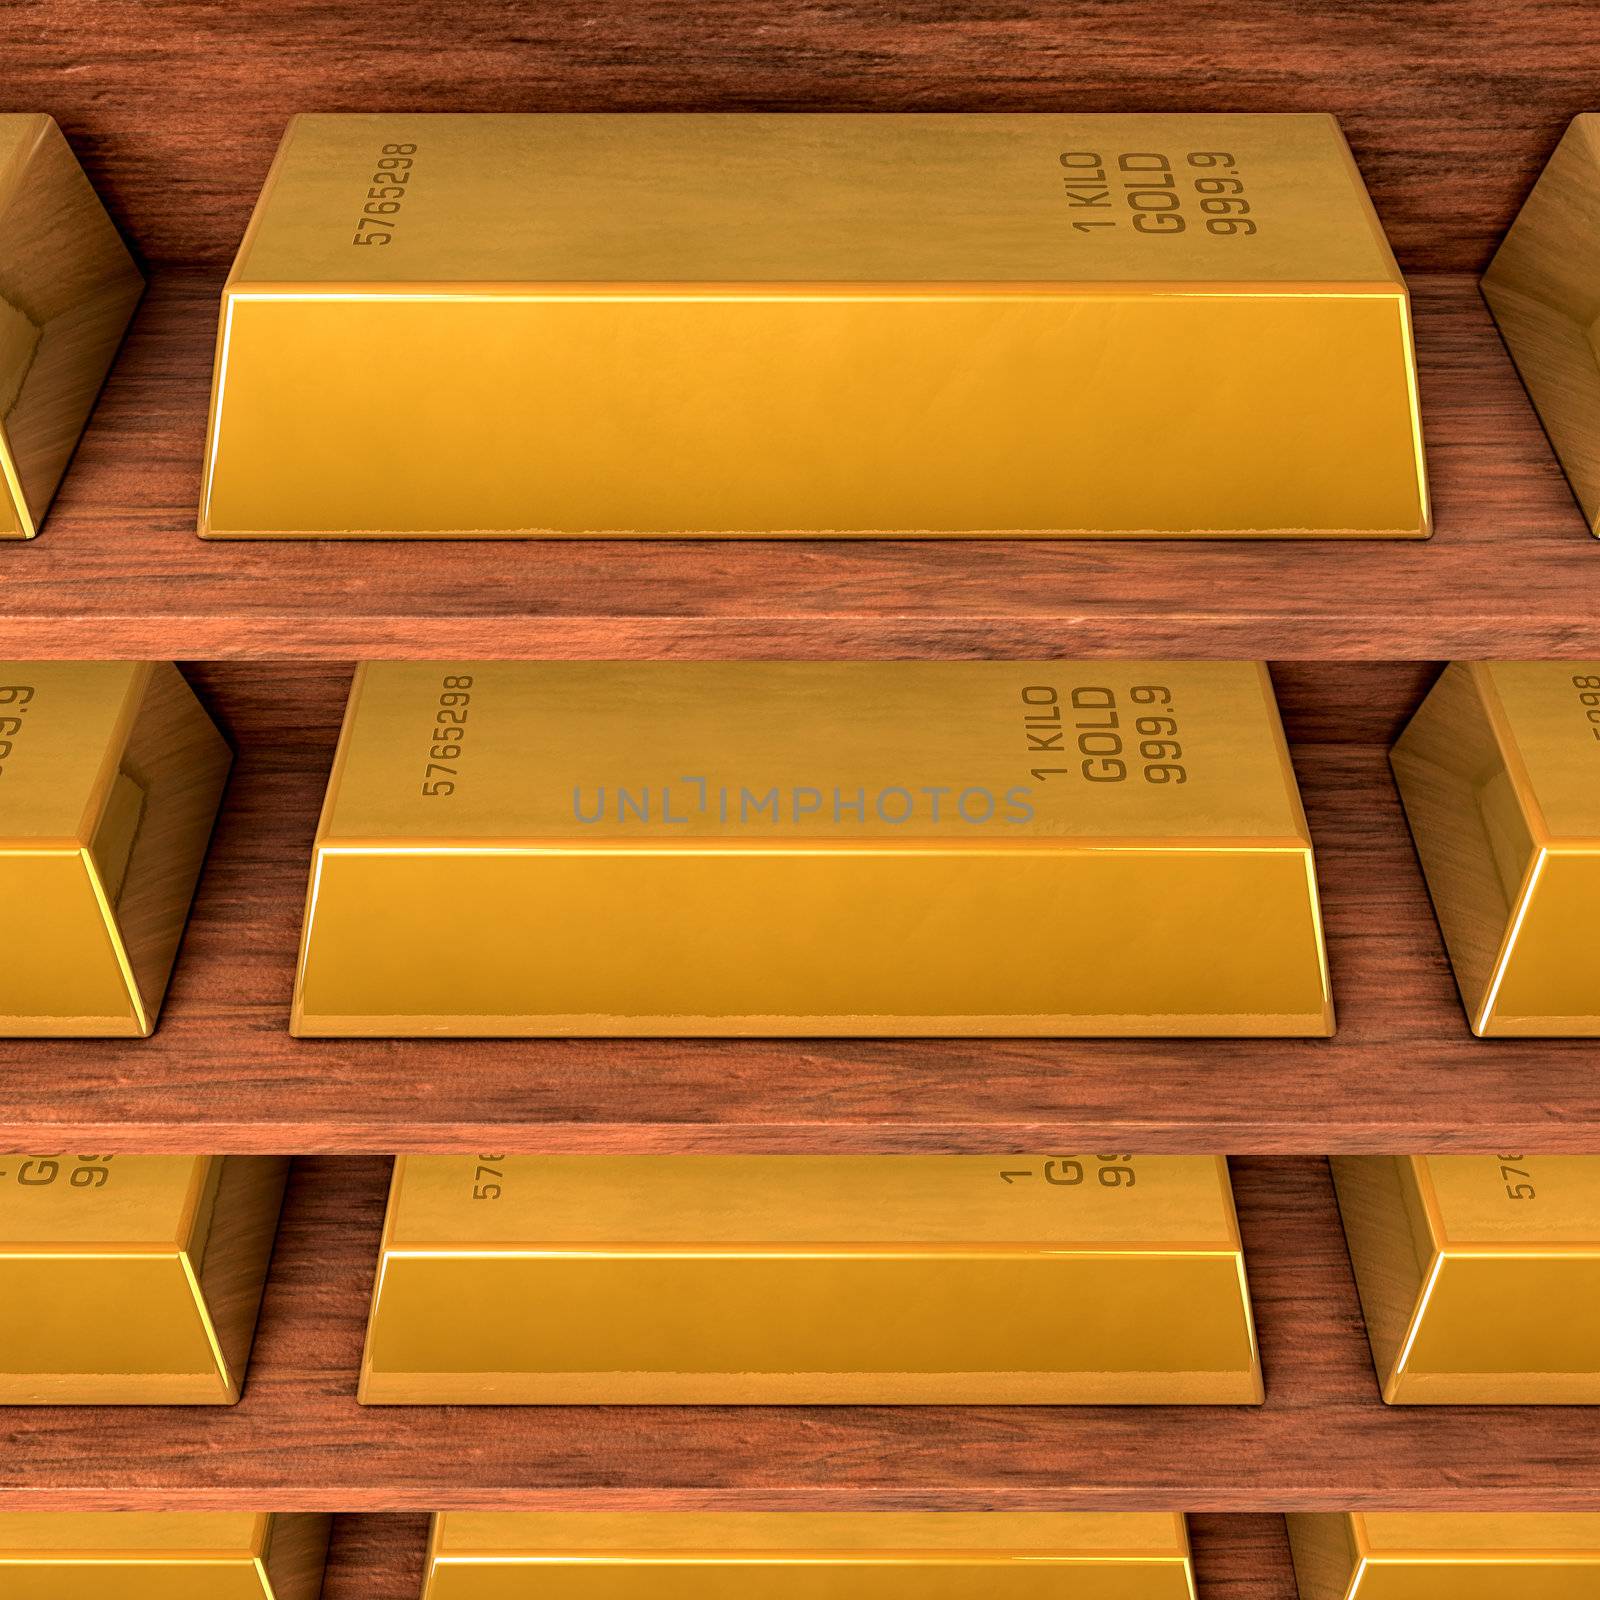 Several gold bars on wood shelves